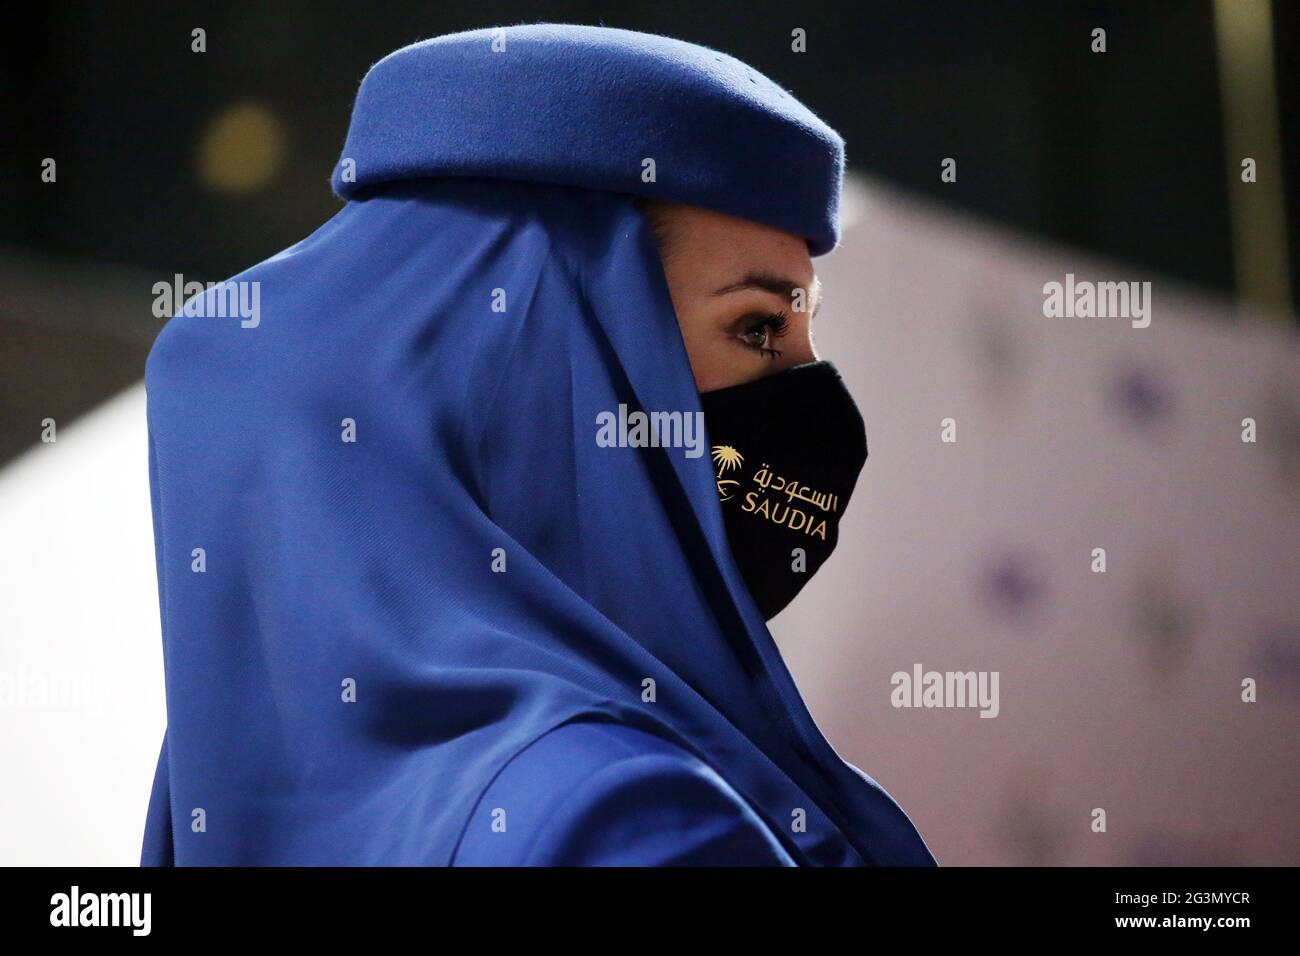 "20.02.2021, Riad, Riyadh, Saudi Arabia - Flight attendant of Saudi Arabian Airlines wears mouth-nose protection in times of corona pandemic. 00S21022 Stock Photo